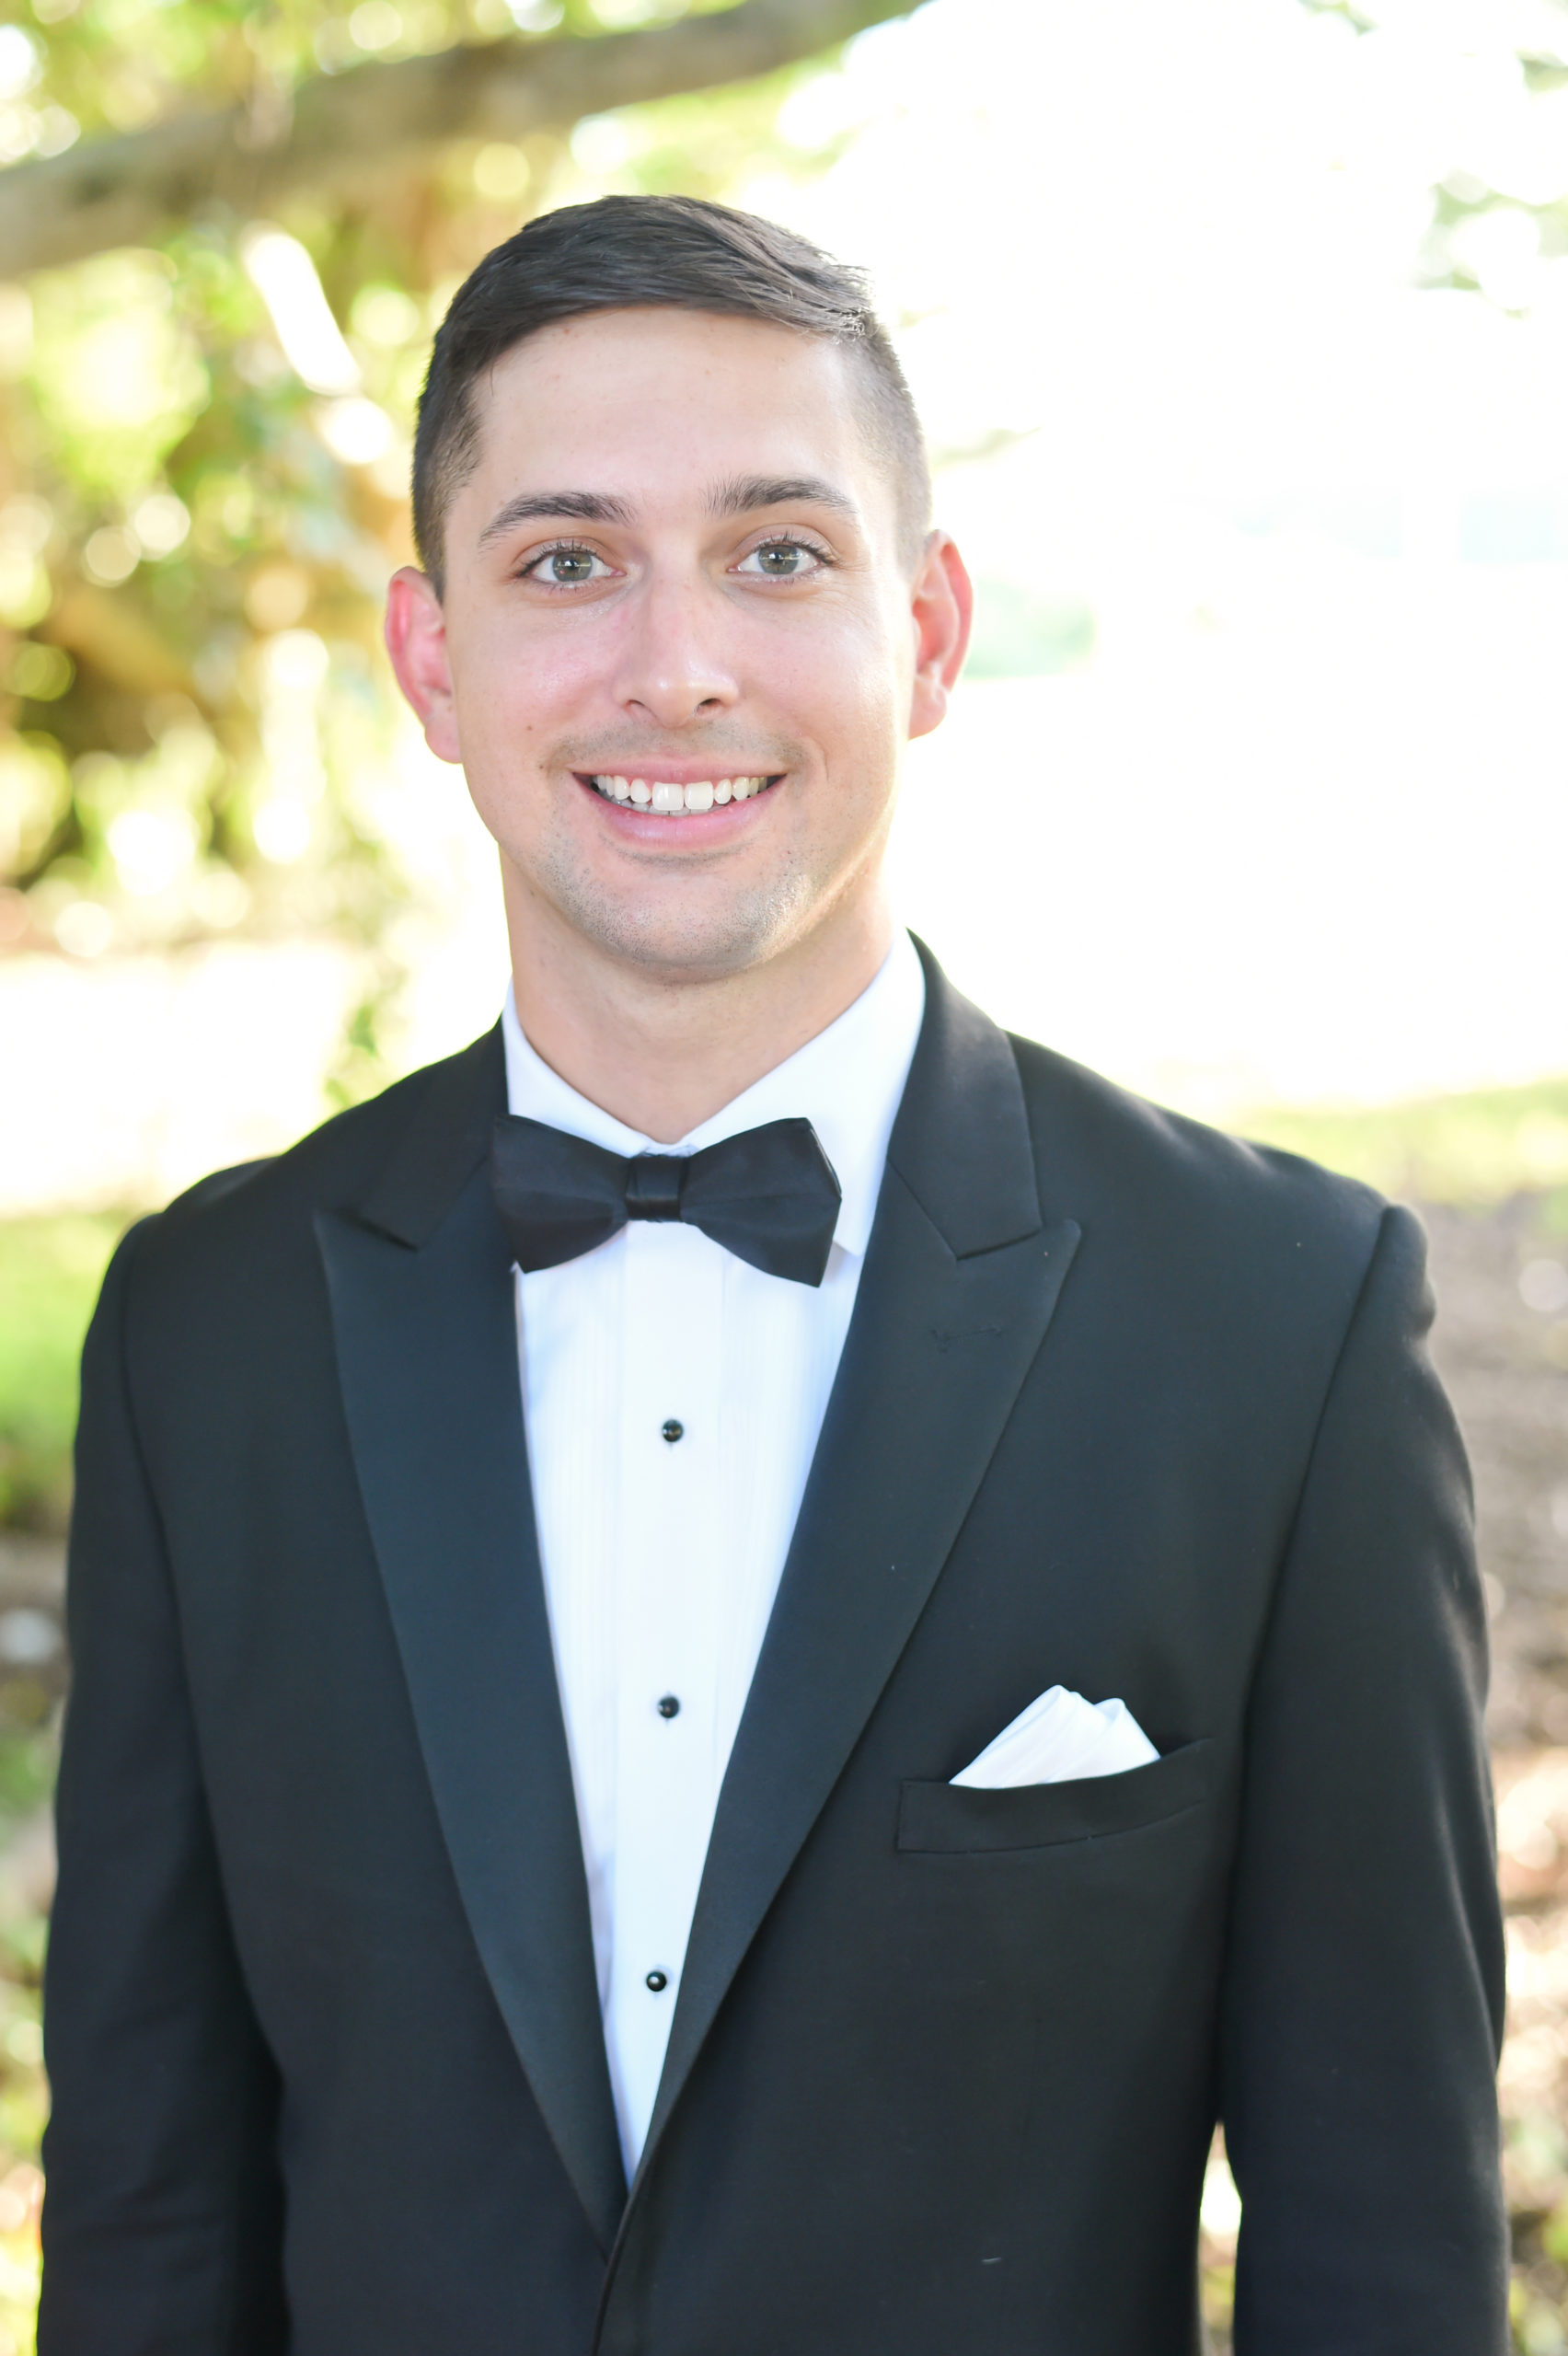 The groom wore a peak lapel tuxedo with black bowtie